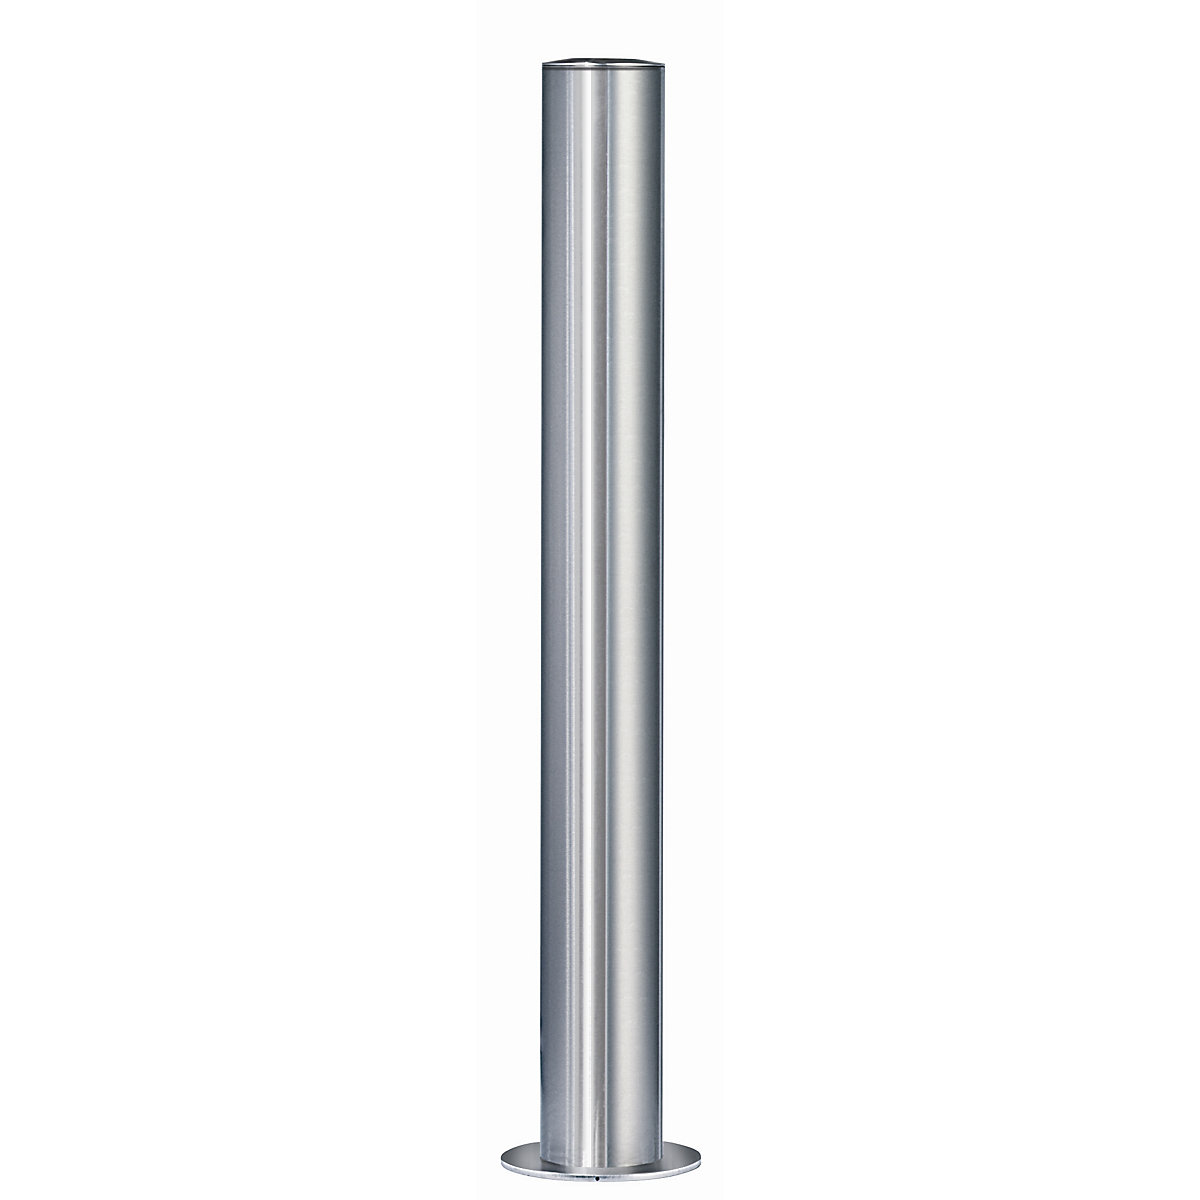 Poste barrera de acero inoxidable, con cabezal plano, placa base para atornillar, Ø 102 mm